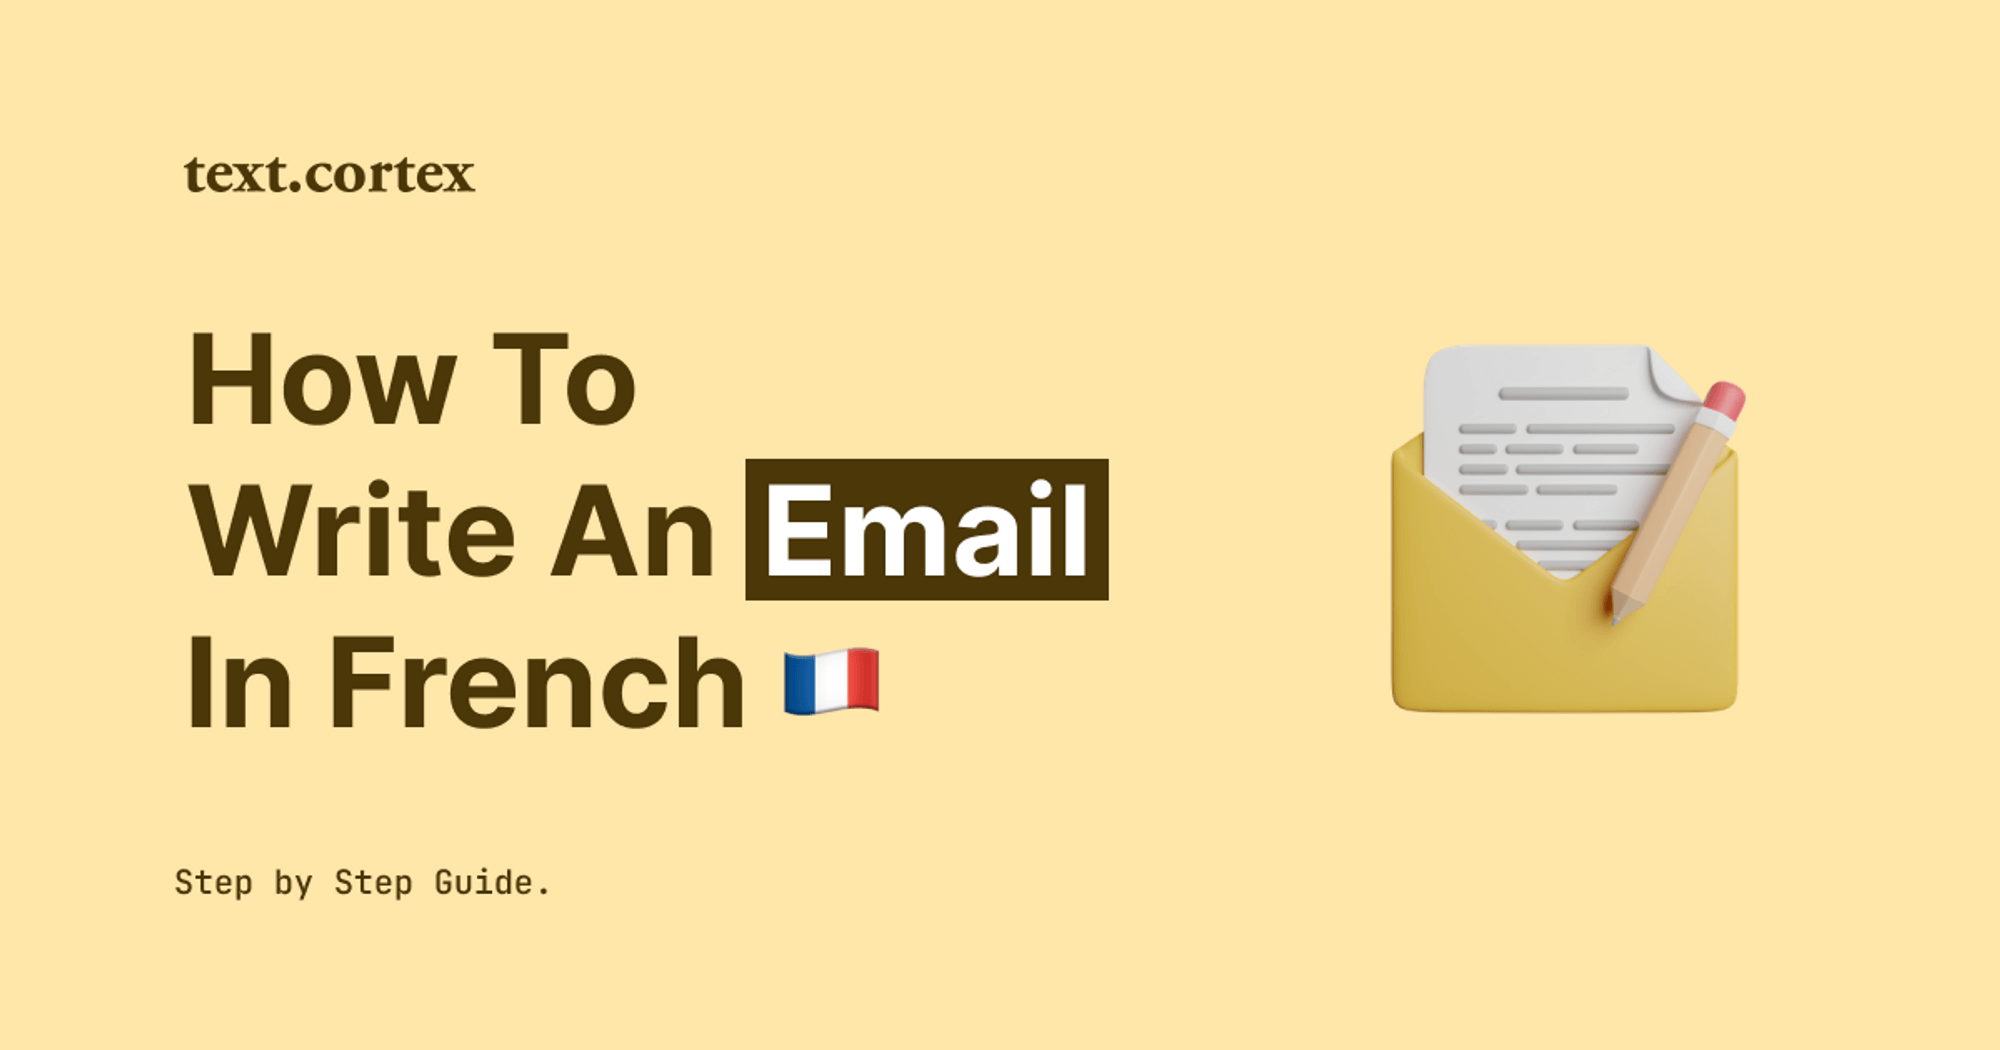 Cómo escribir un correo electrónico en francés - Guía paso a paso